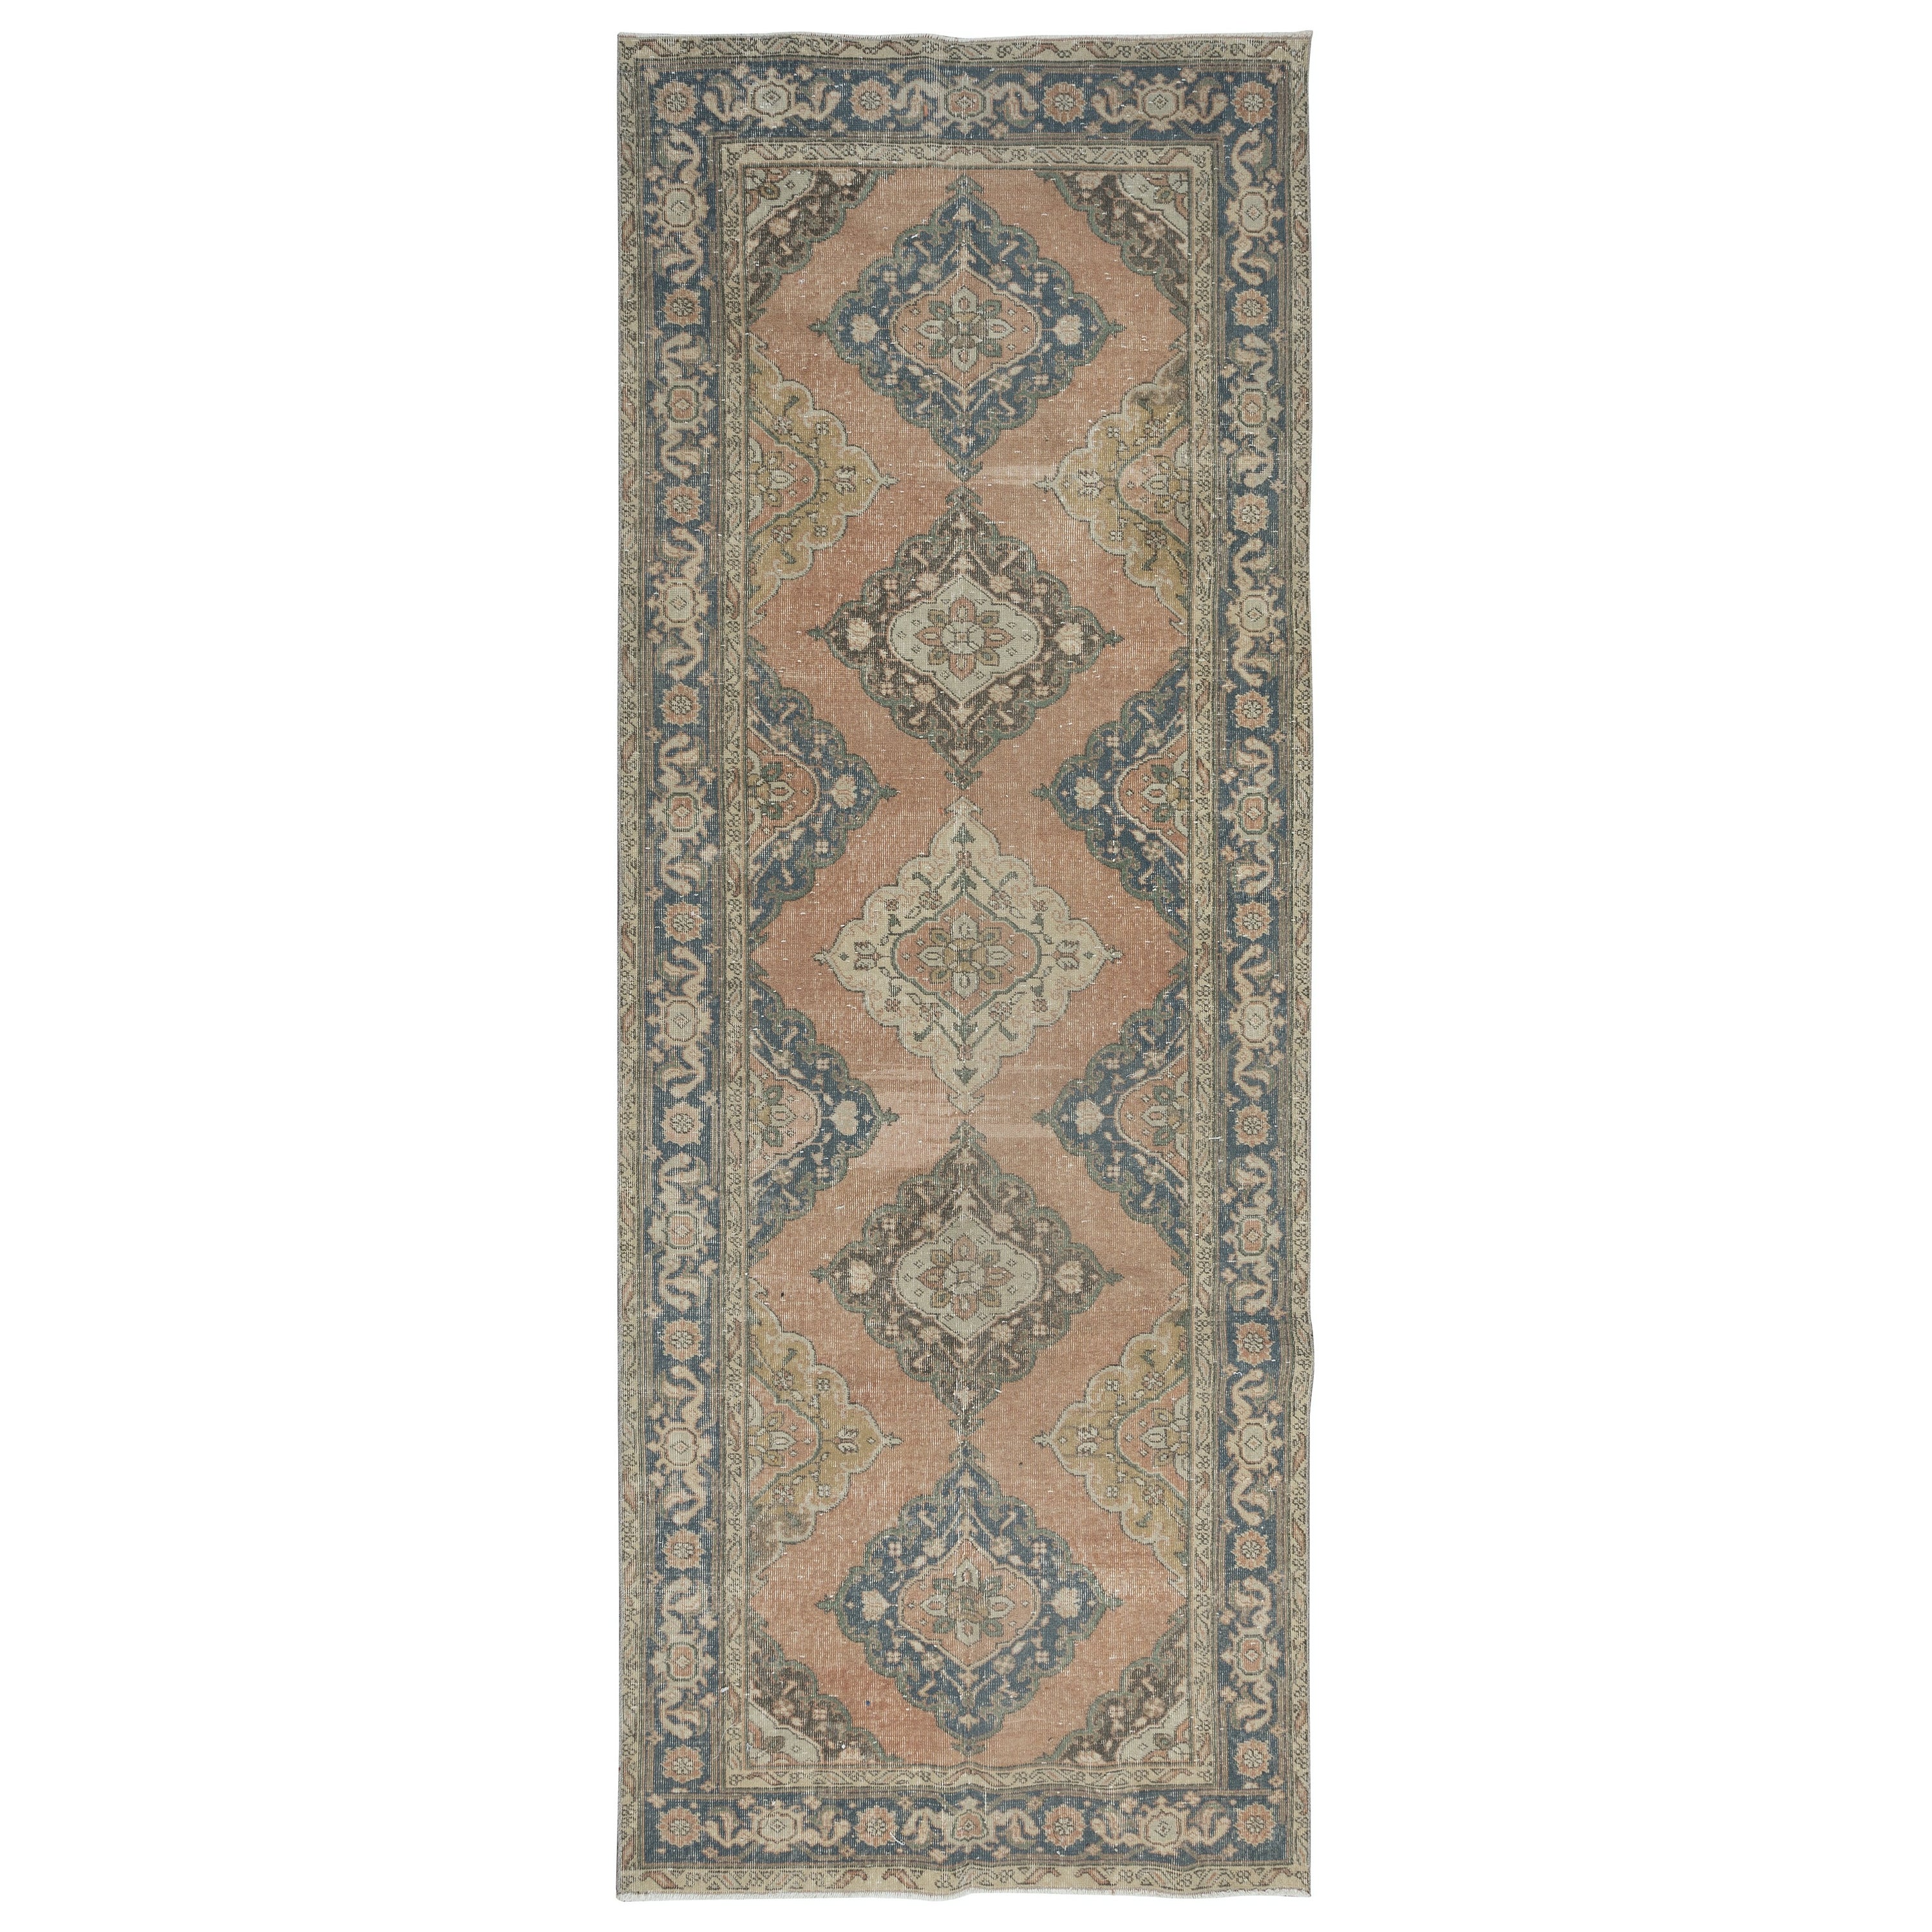 4.6x12 Ft Handmade Runner Rug for Hallway, Vintage Turkish Sille Corridor Carpet